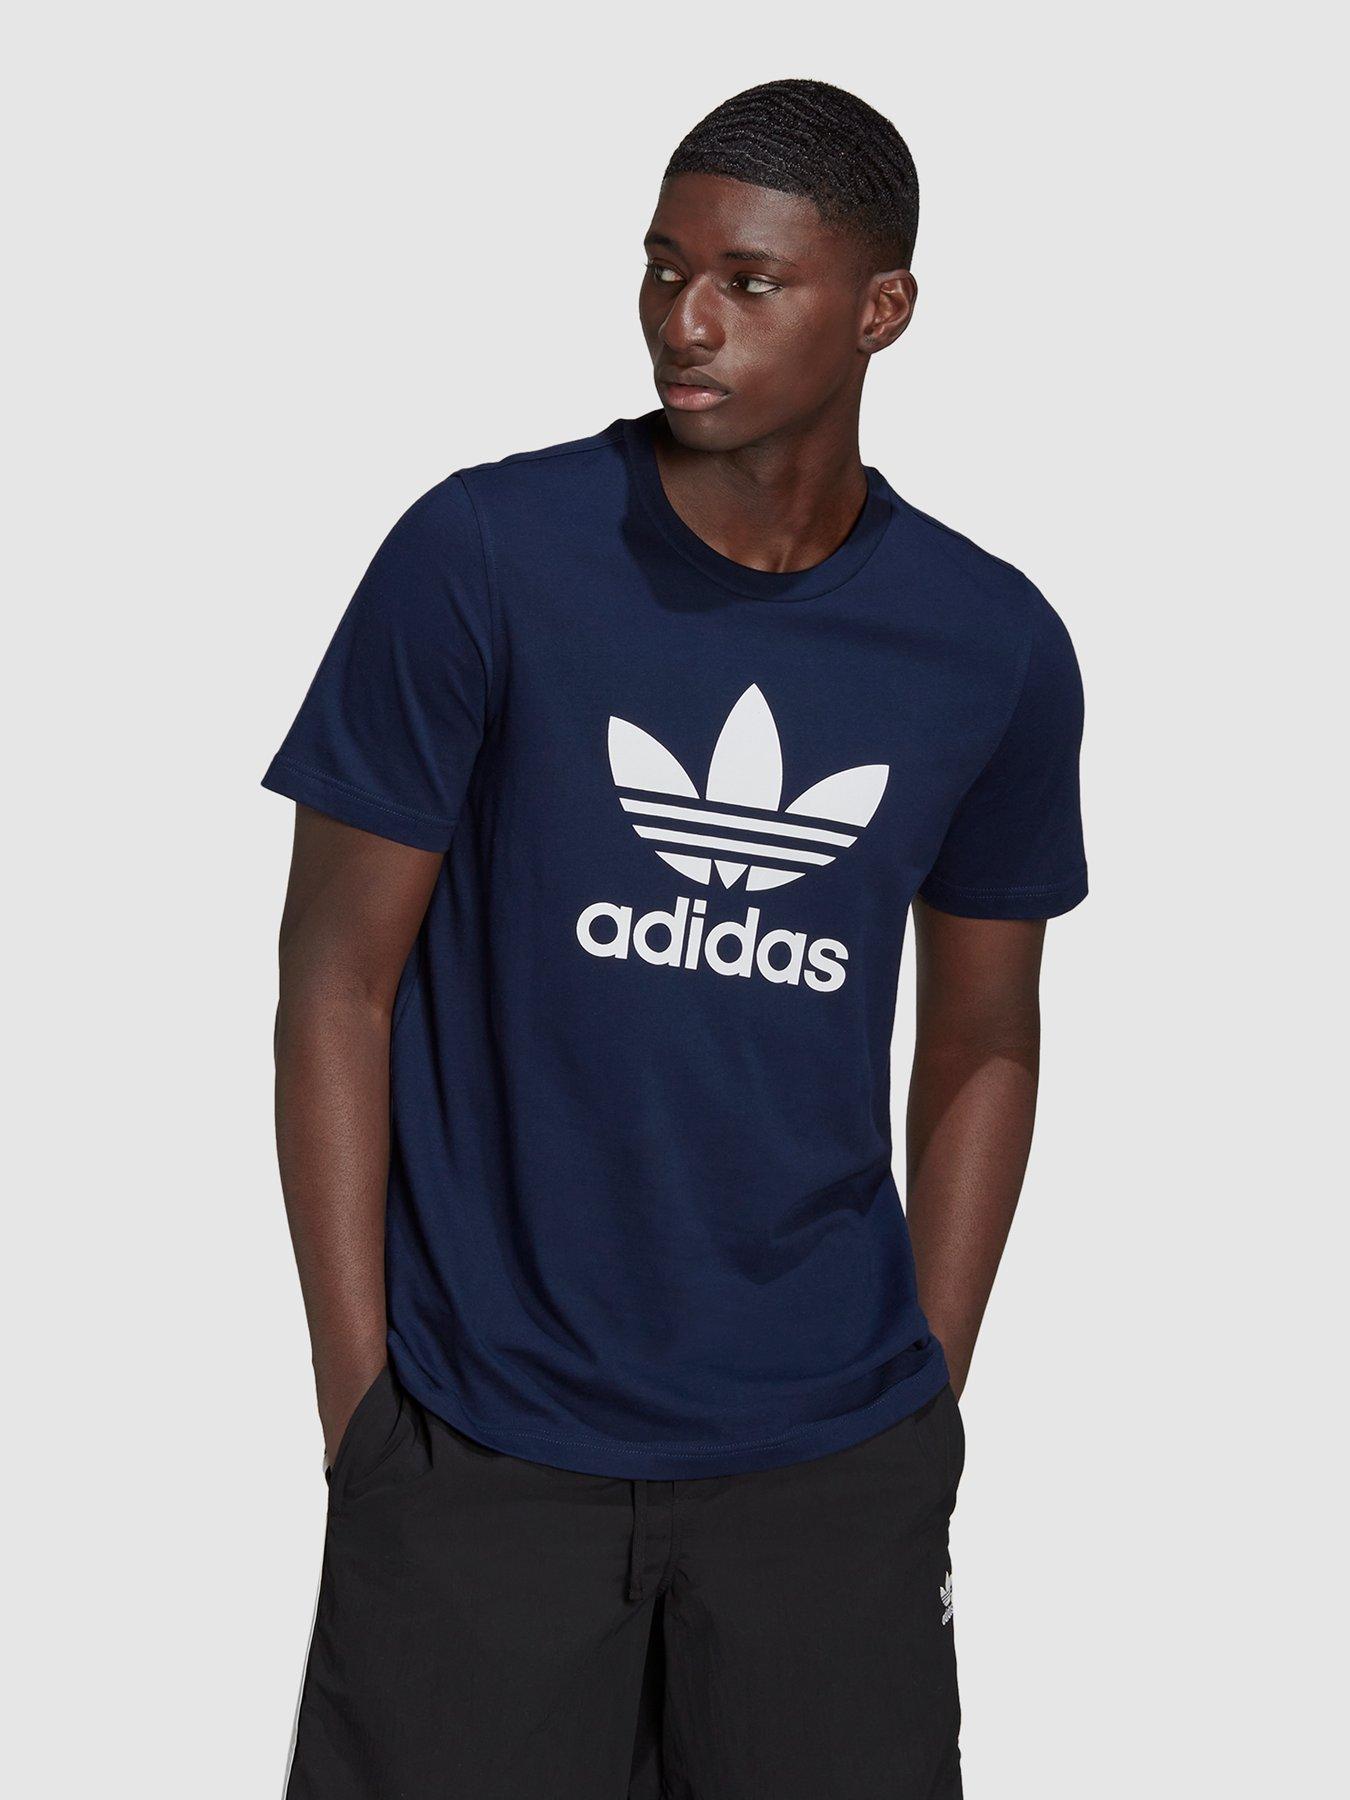 3XL | Adidas | T-shirts & polos | Mens sports clothing Sports & leisure | Very Ireland